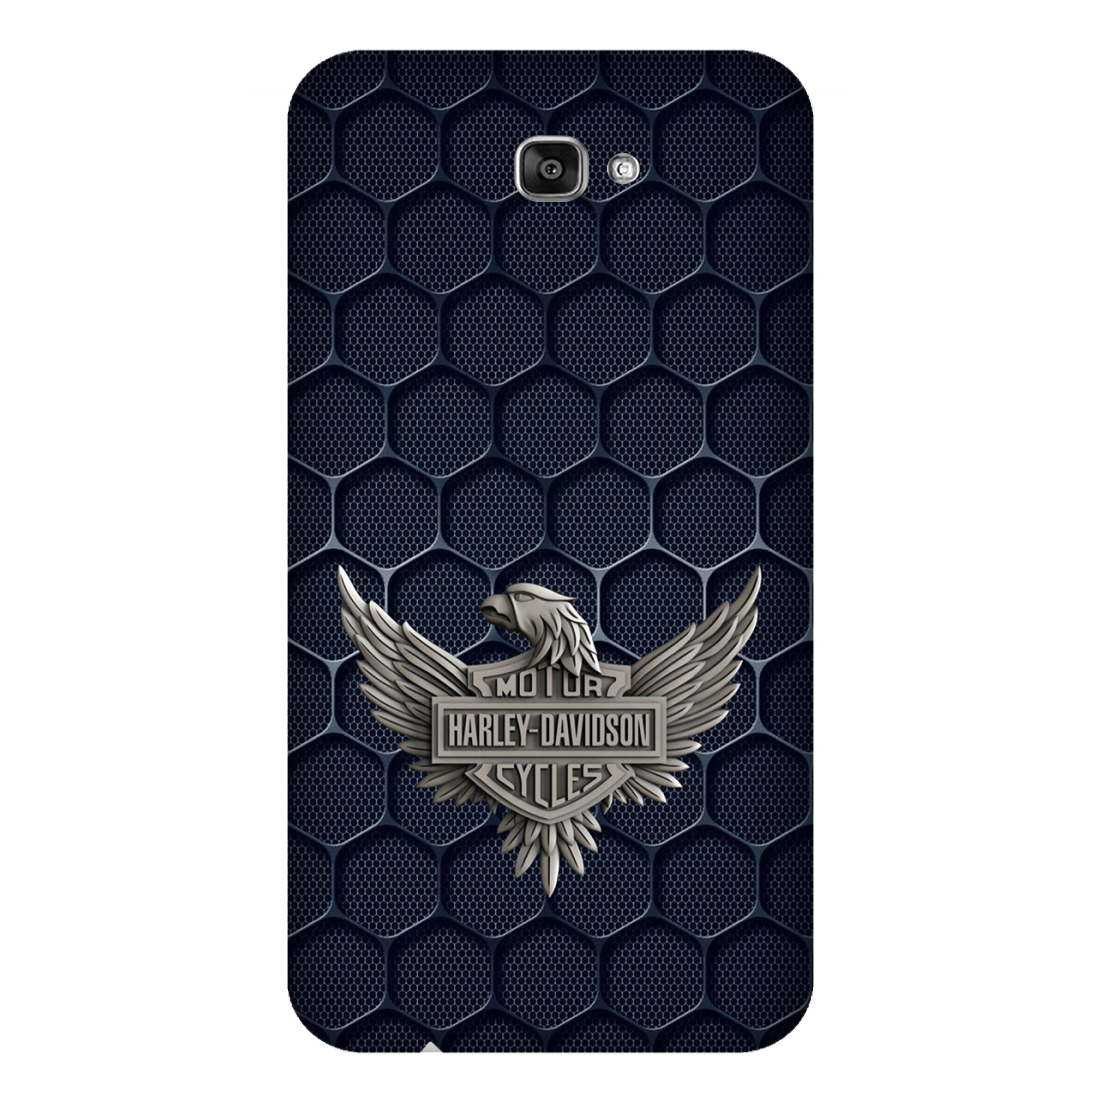 Harley-Davidson Emblem on Hexagonal Pattern Case Samsung Galaxy J7 Prime